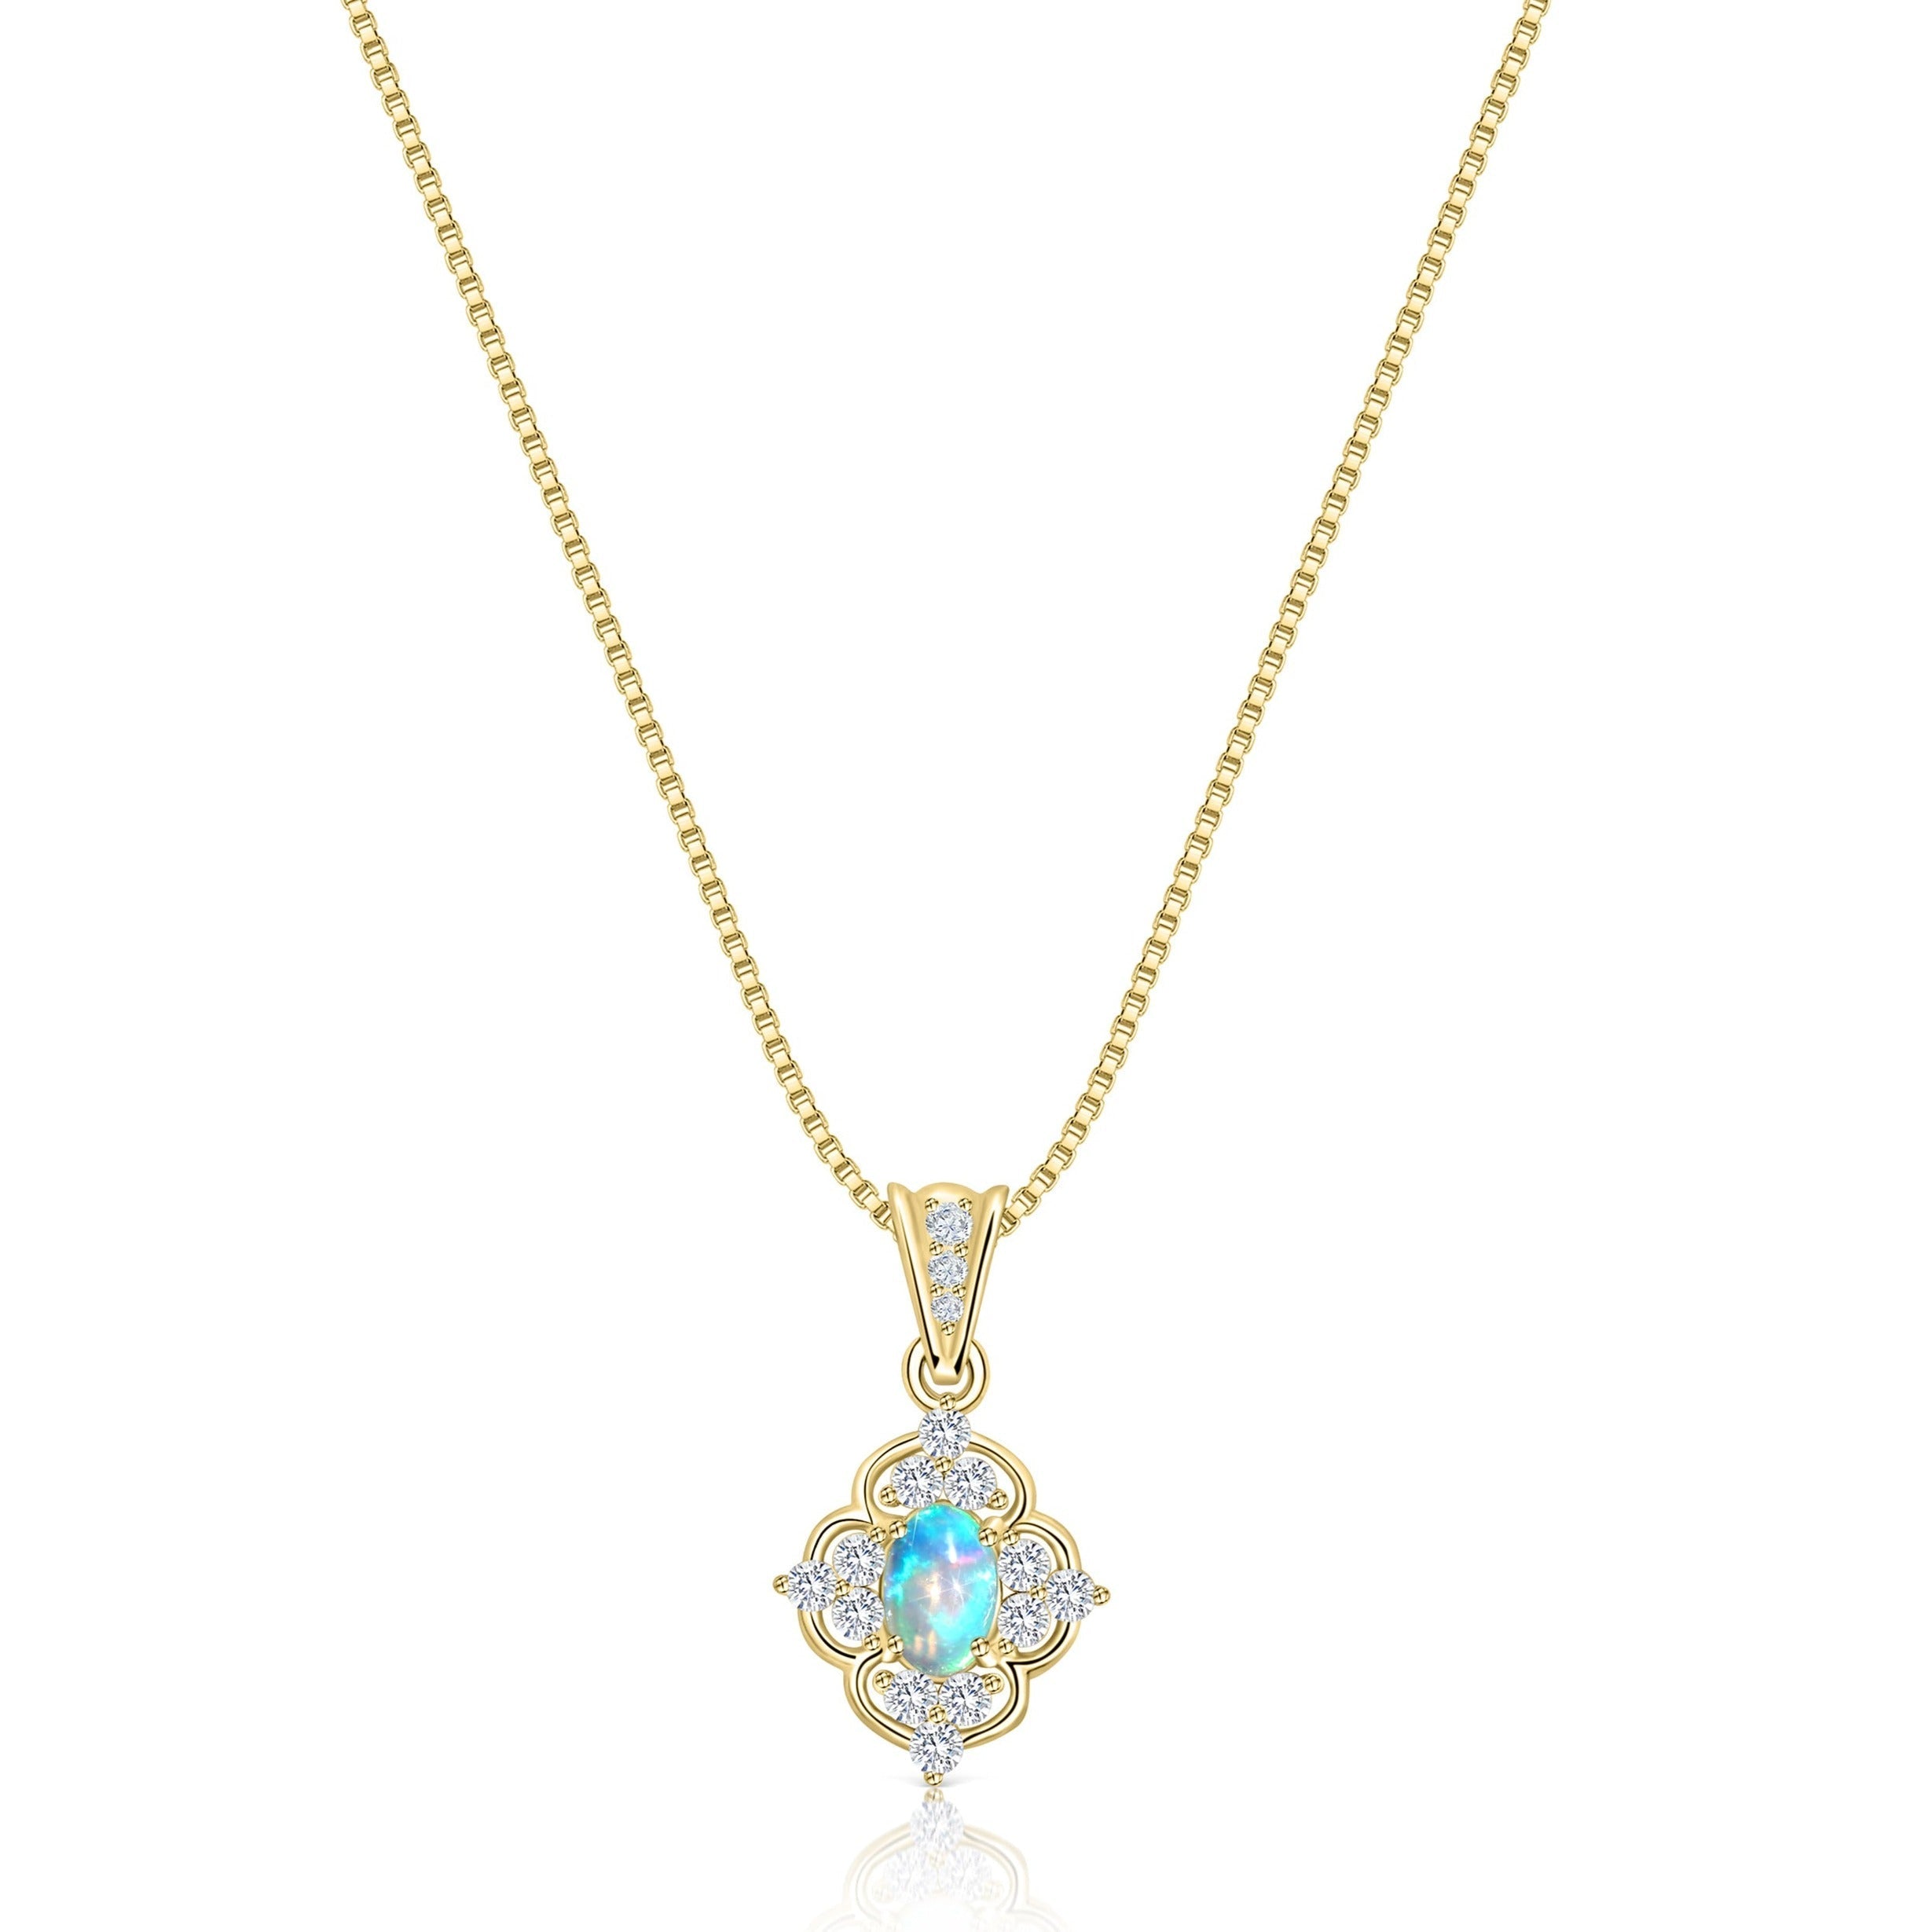 Serena Opal Necklace